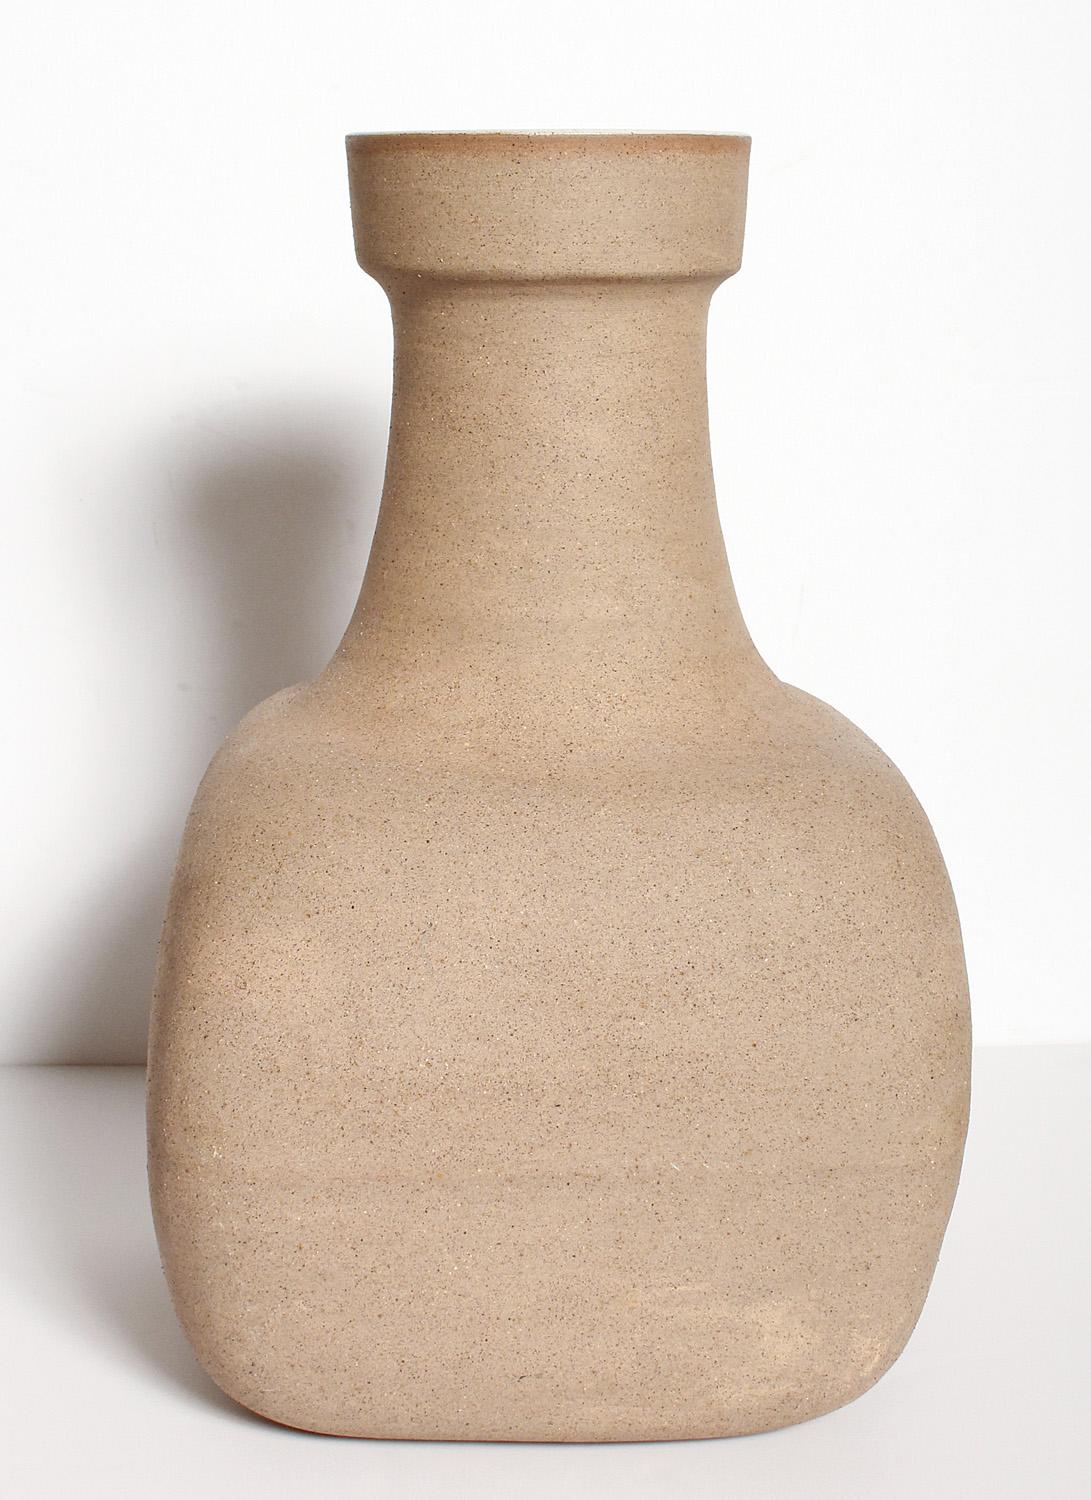 Large signed stoneware vase by Bruno Gambone, circa 1975.